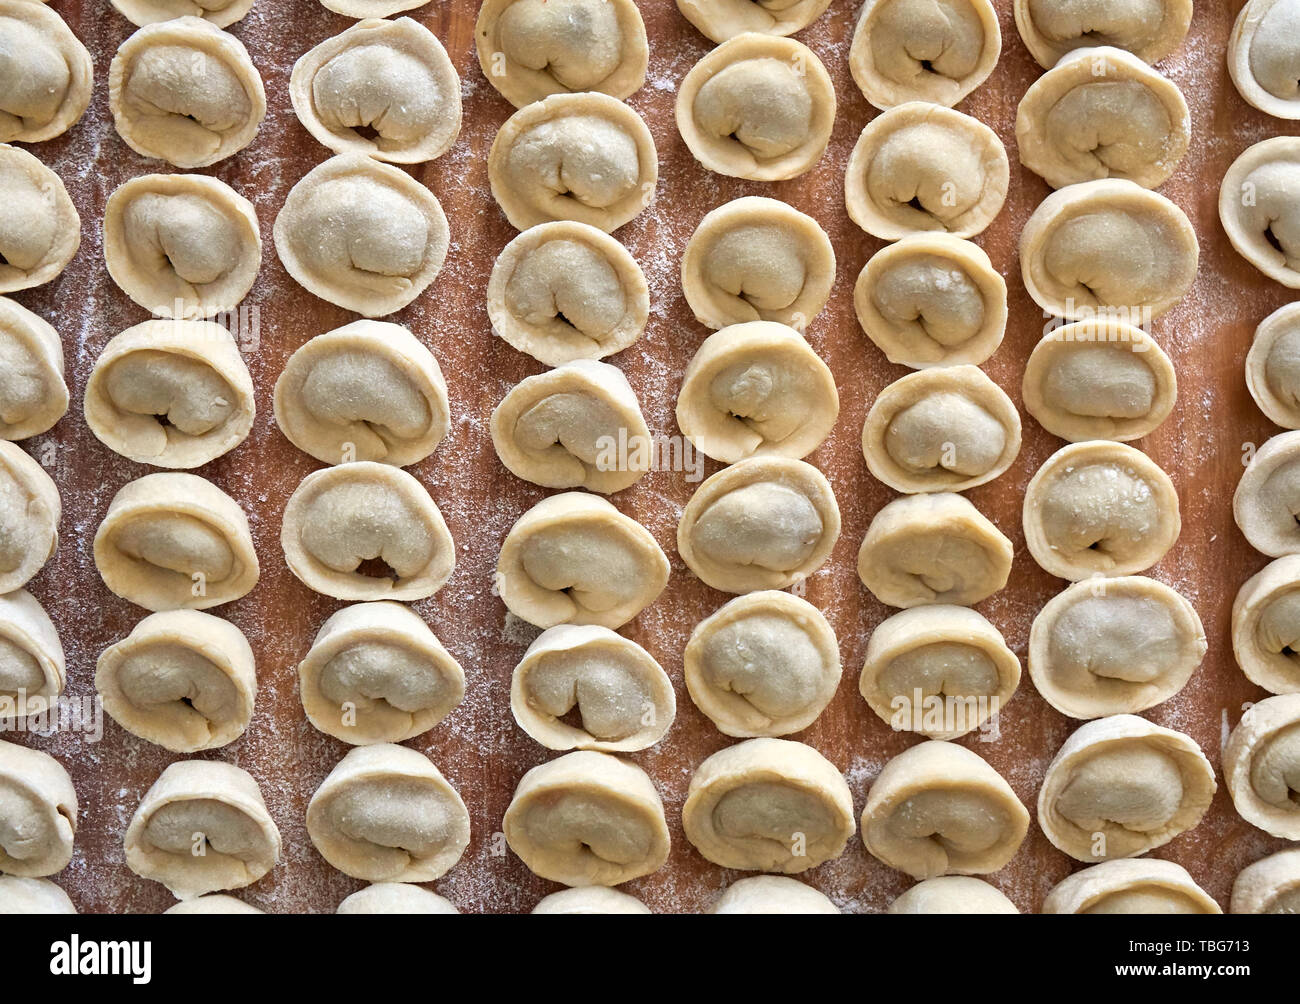 Homemade russian dumplings, pelmeni, covered in flour on the wooden board Stock Photo